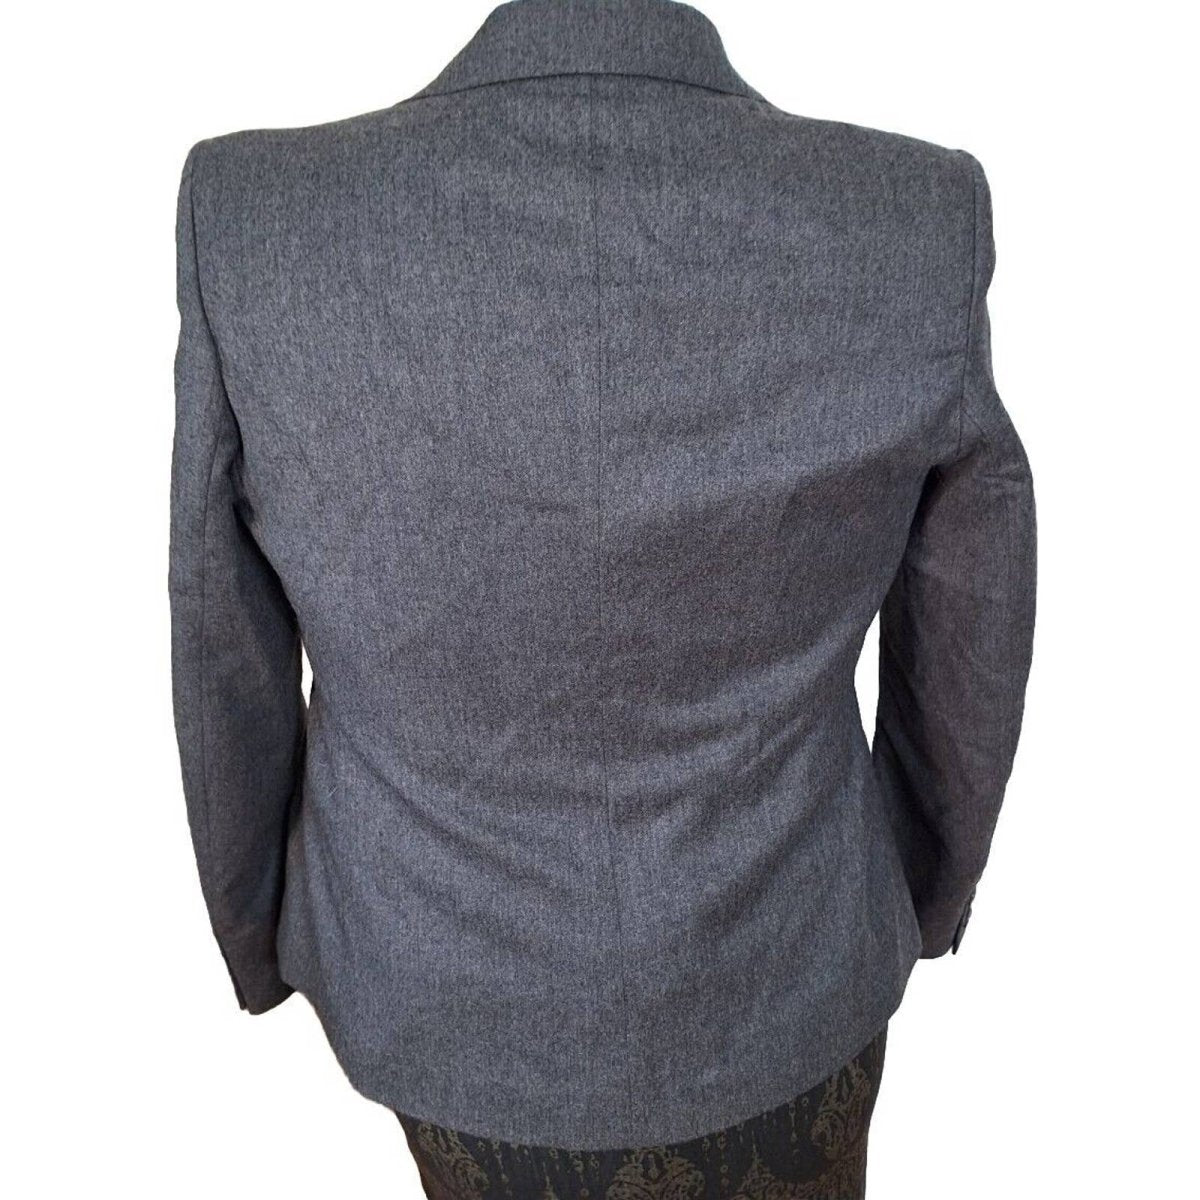 Vintage 80s Gray Wool Tailored Single Button Blazer Jacket Women's Size Medium 8/10 - themallvintage The Mall Vintage